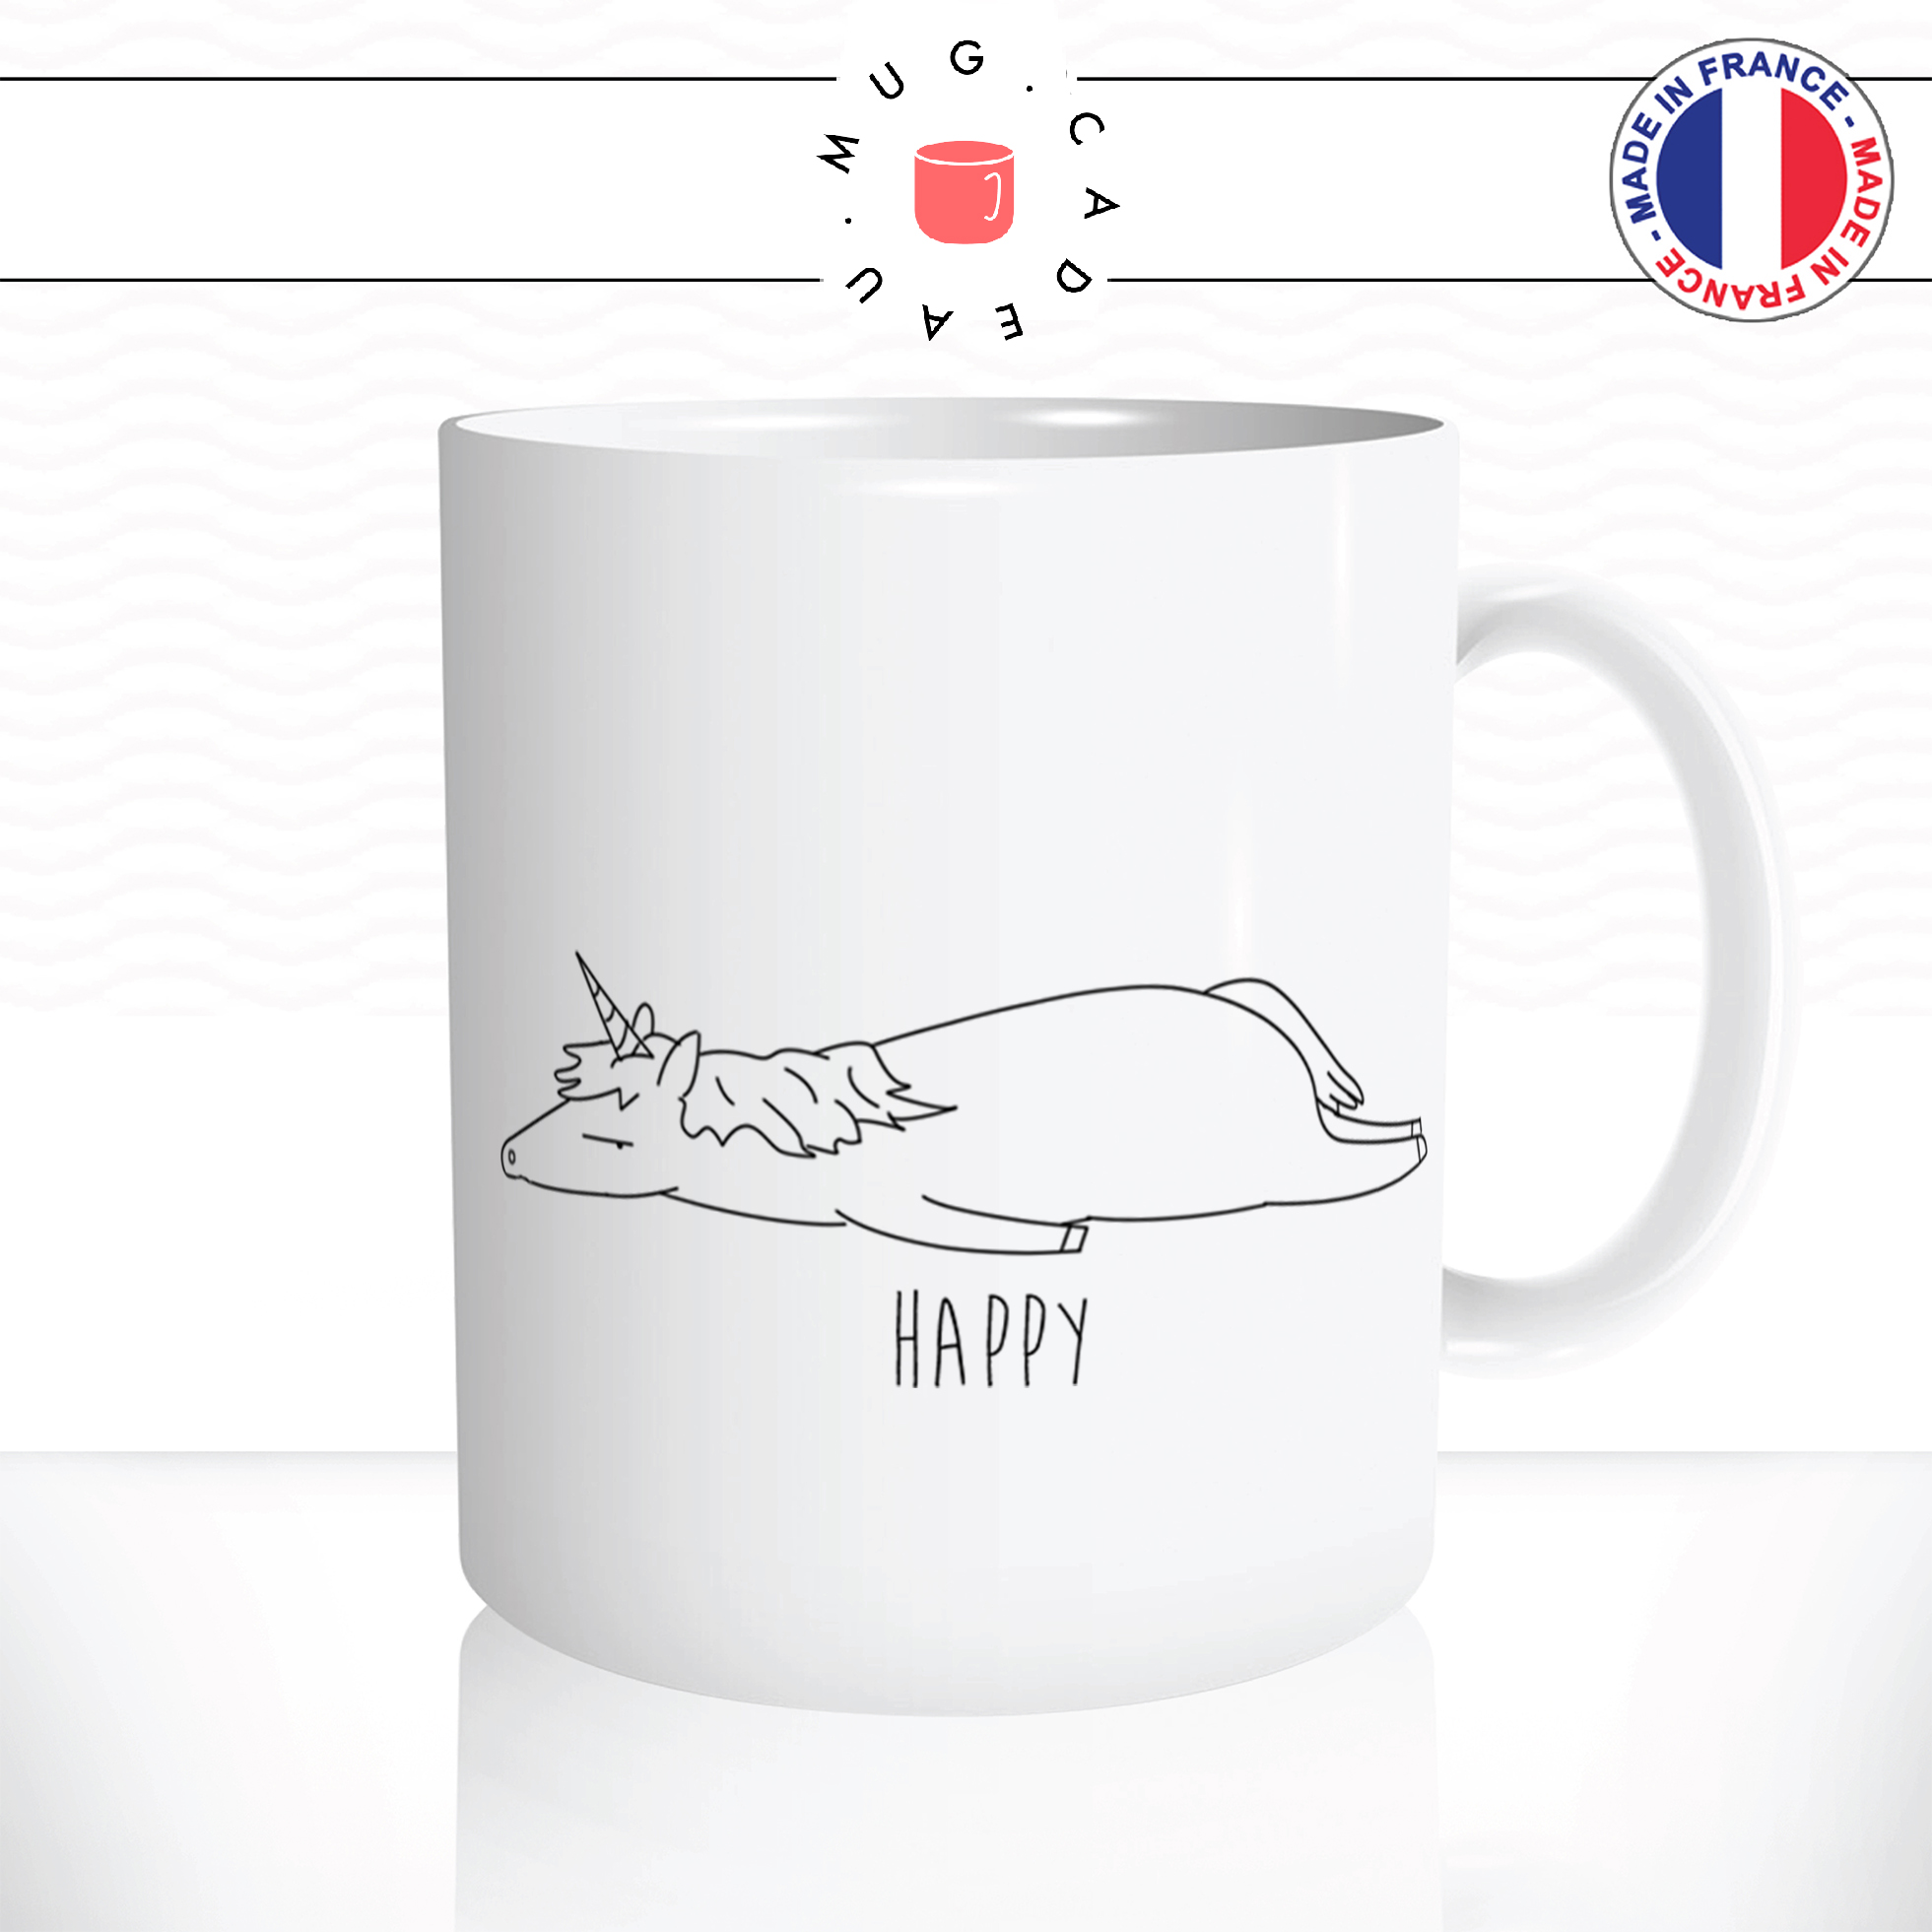 mug-tasse-ref10-licorne-happy-dessin-humour-cafe-the-mugs-tasses-personnalise-anse-droite